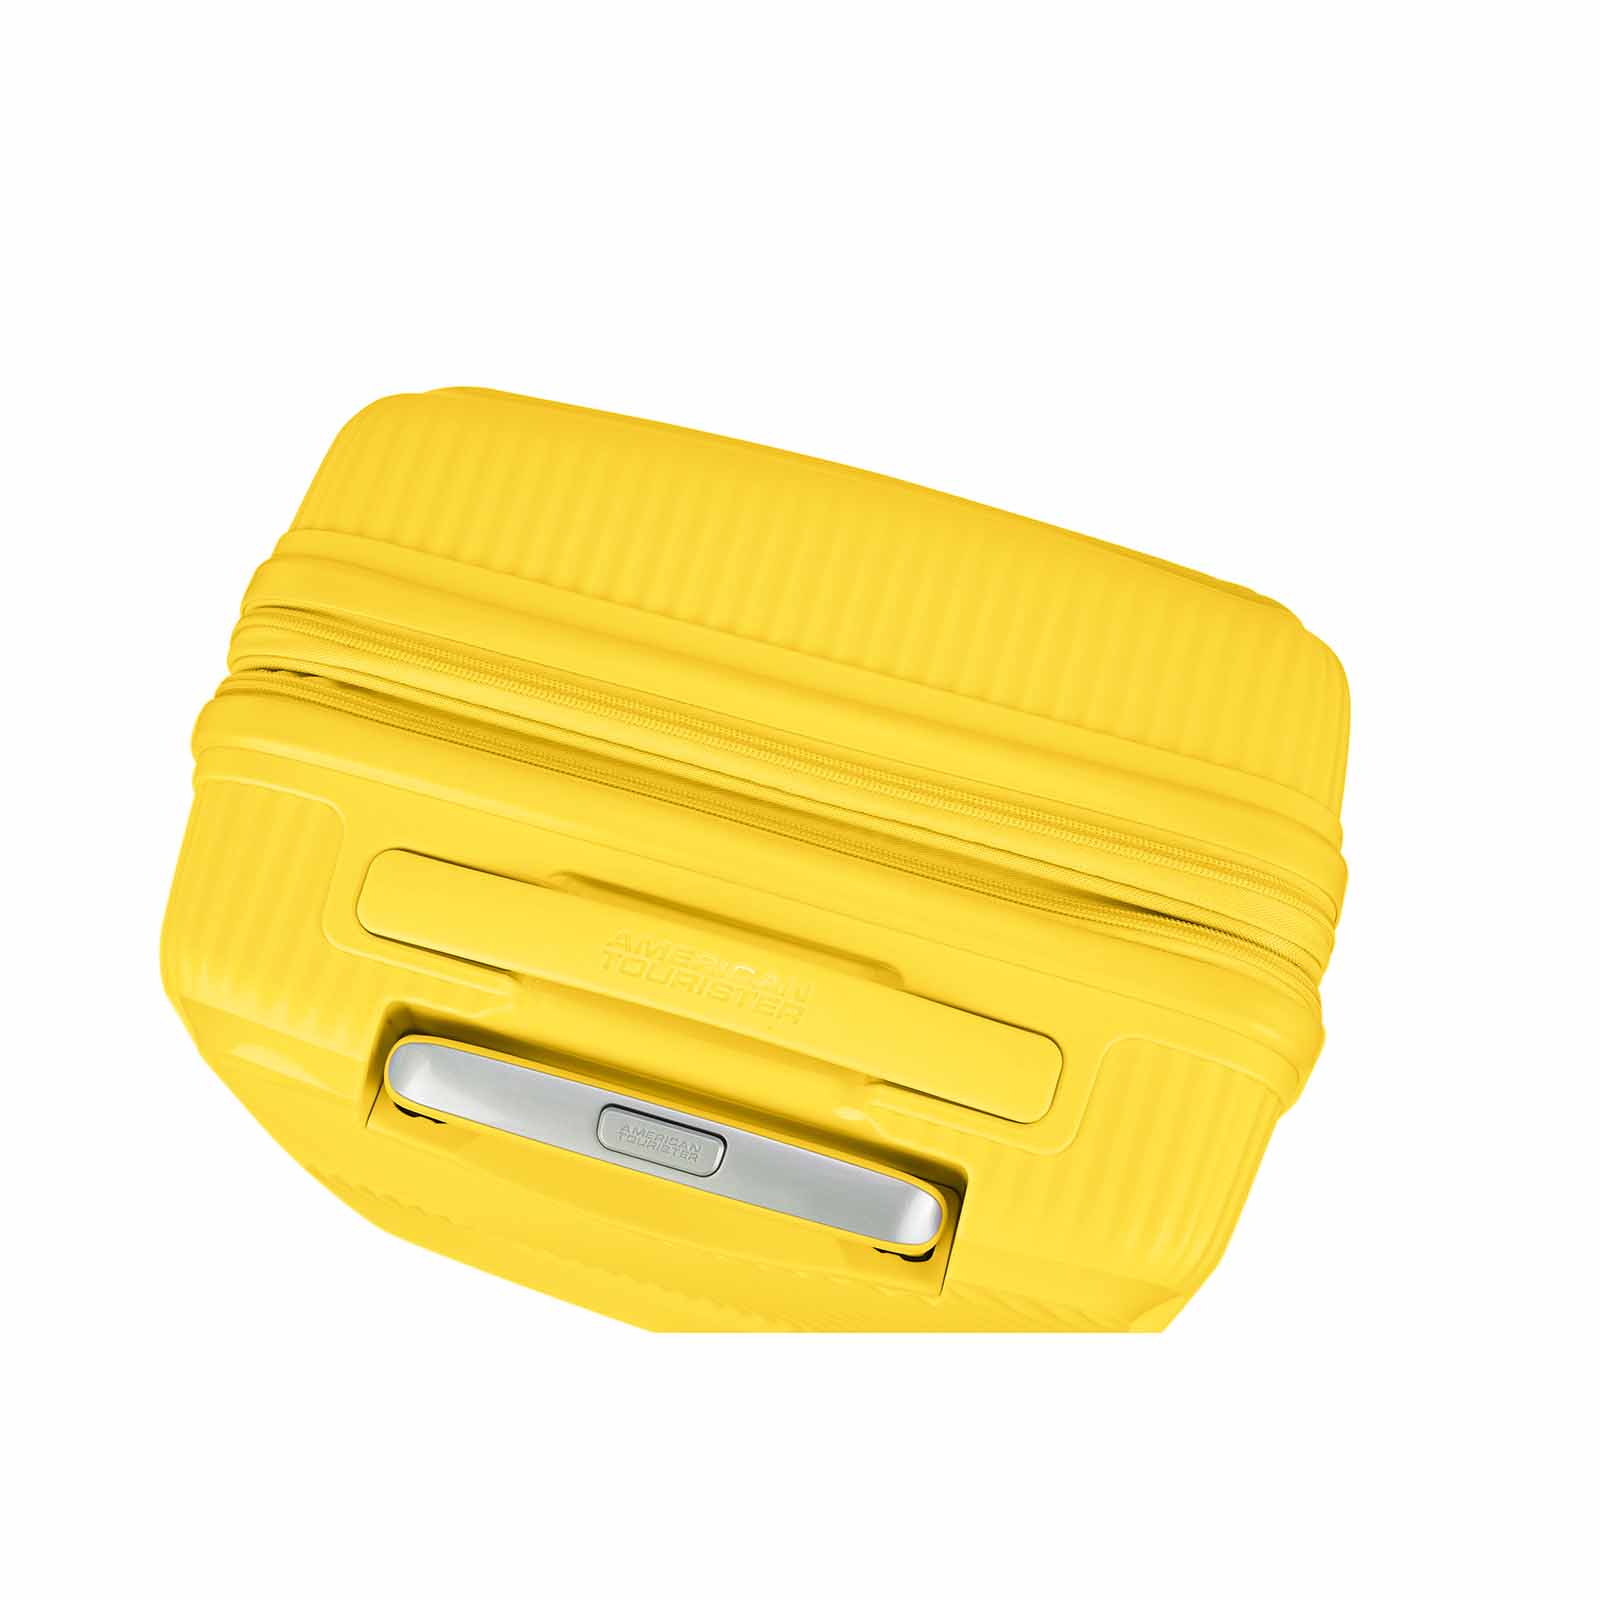 American-Tourister-Curio-2-69cm-Suitcase-Golden-Yellow-Handle